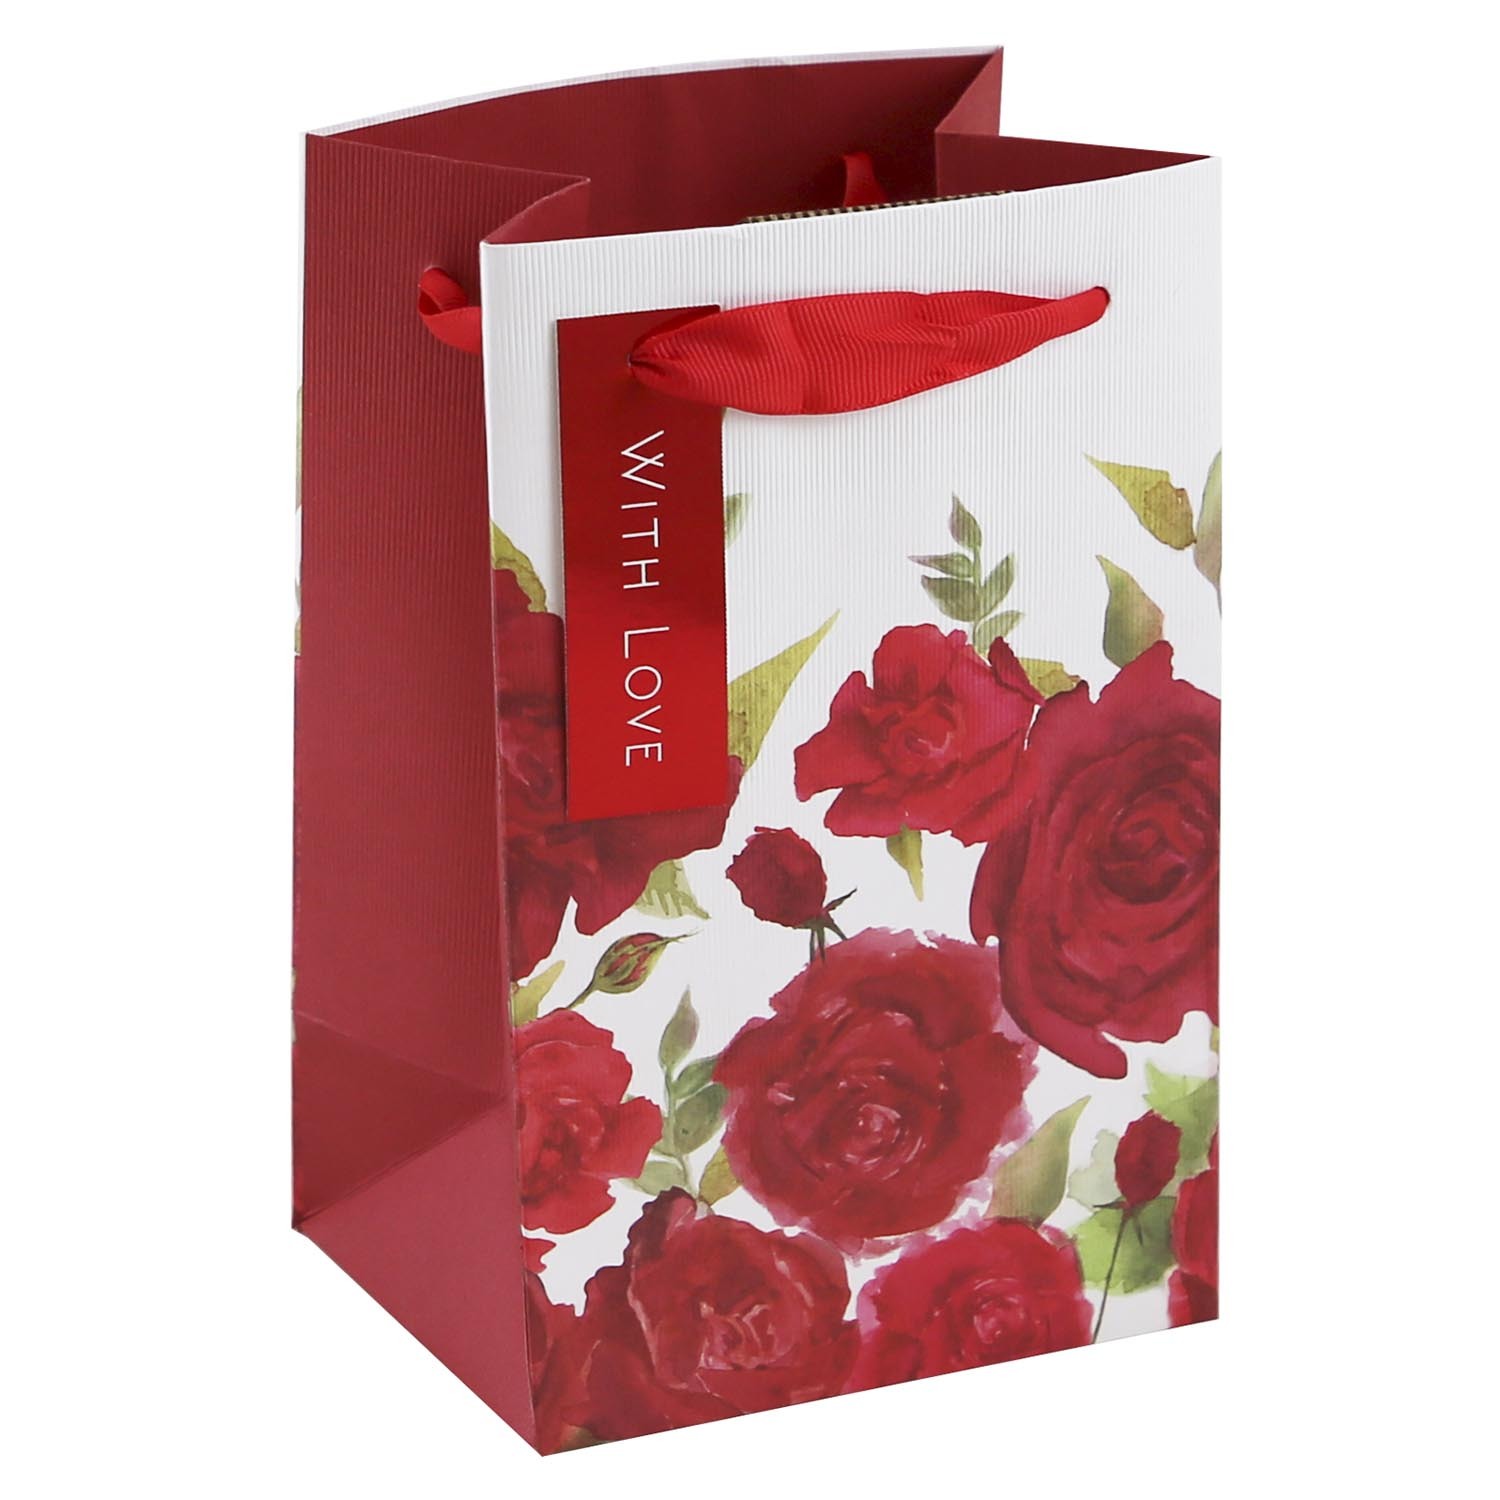 Romantic Flowers Perfume Bag - Red Image